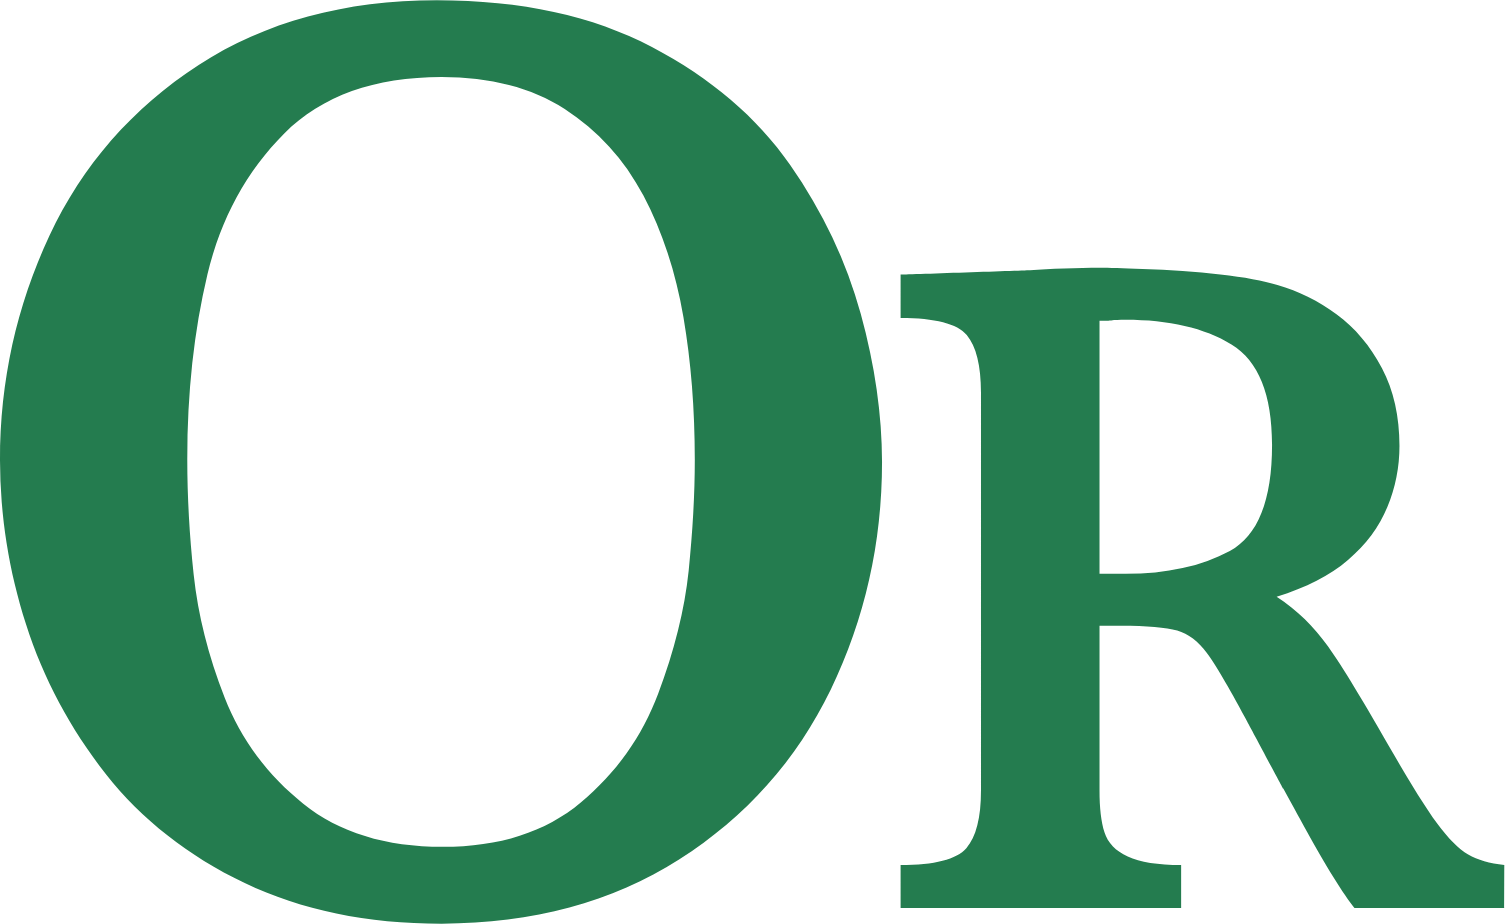 Orrstown Financial Services logo (transparent PNG)